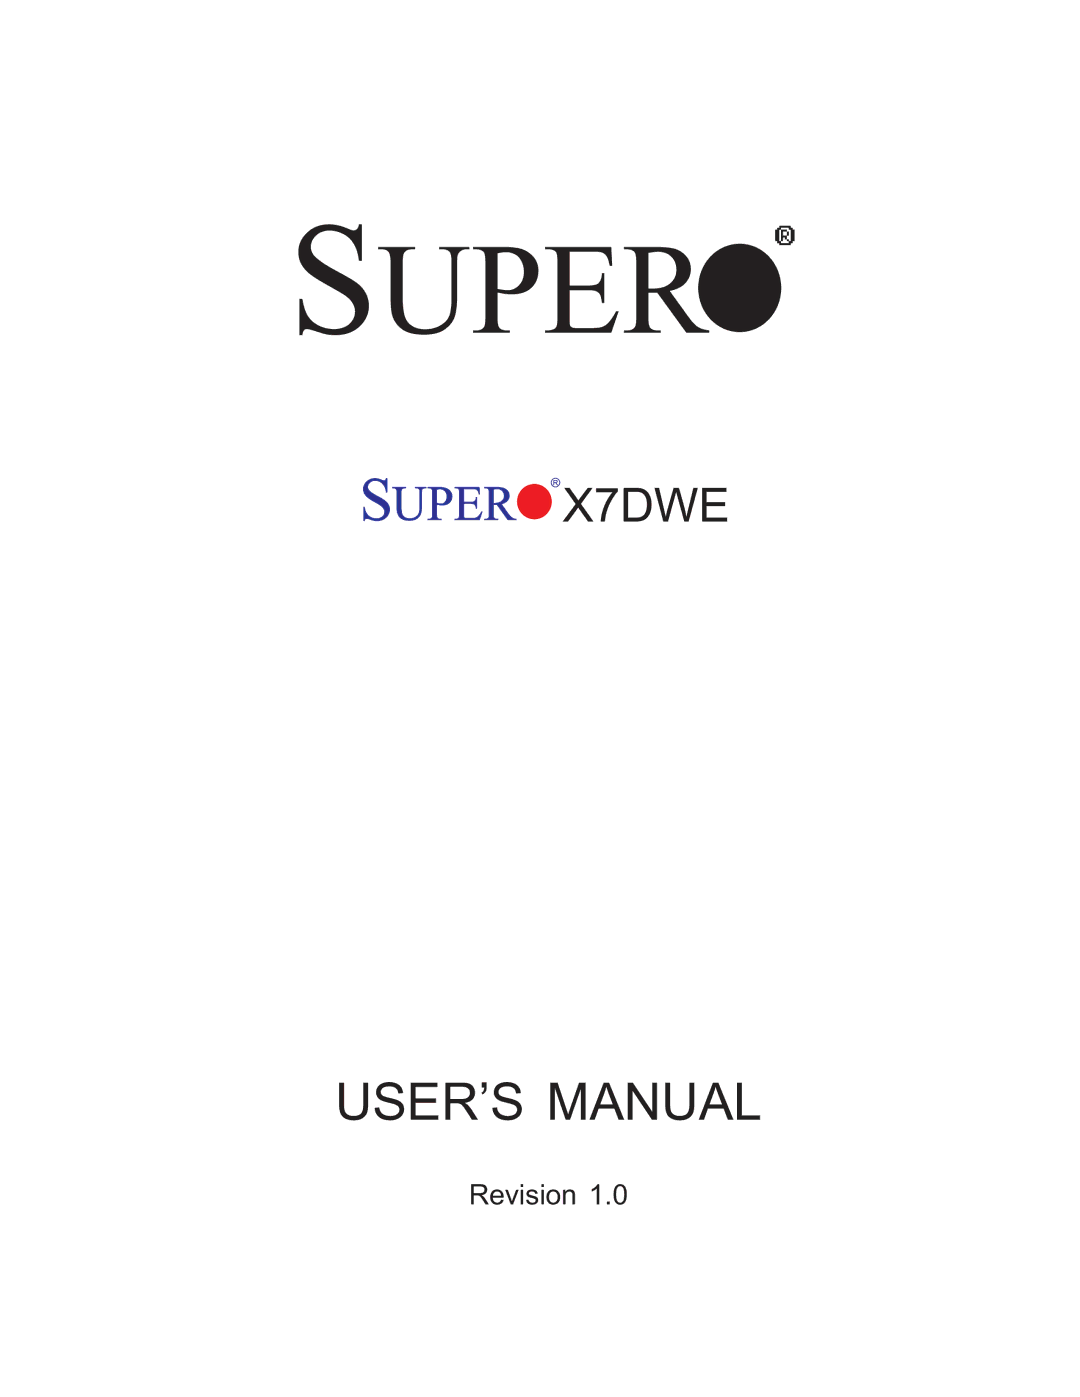 SUPER MICRO Computer X7DWE, Supero user manual USER’S Manual 